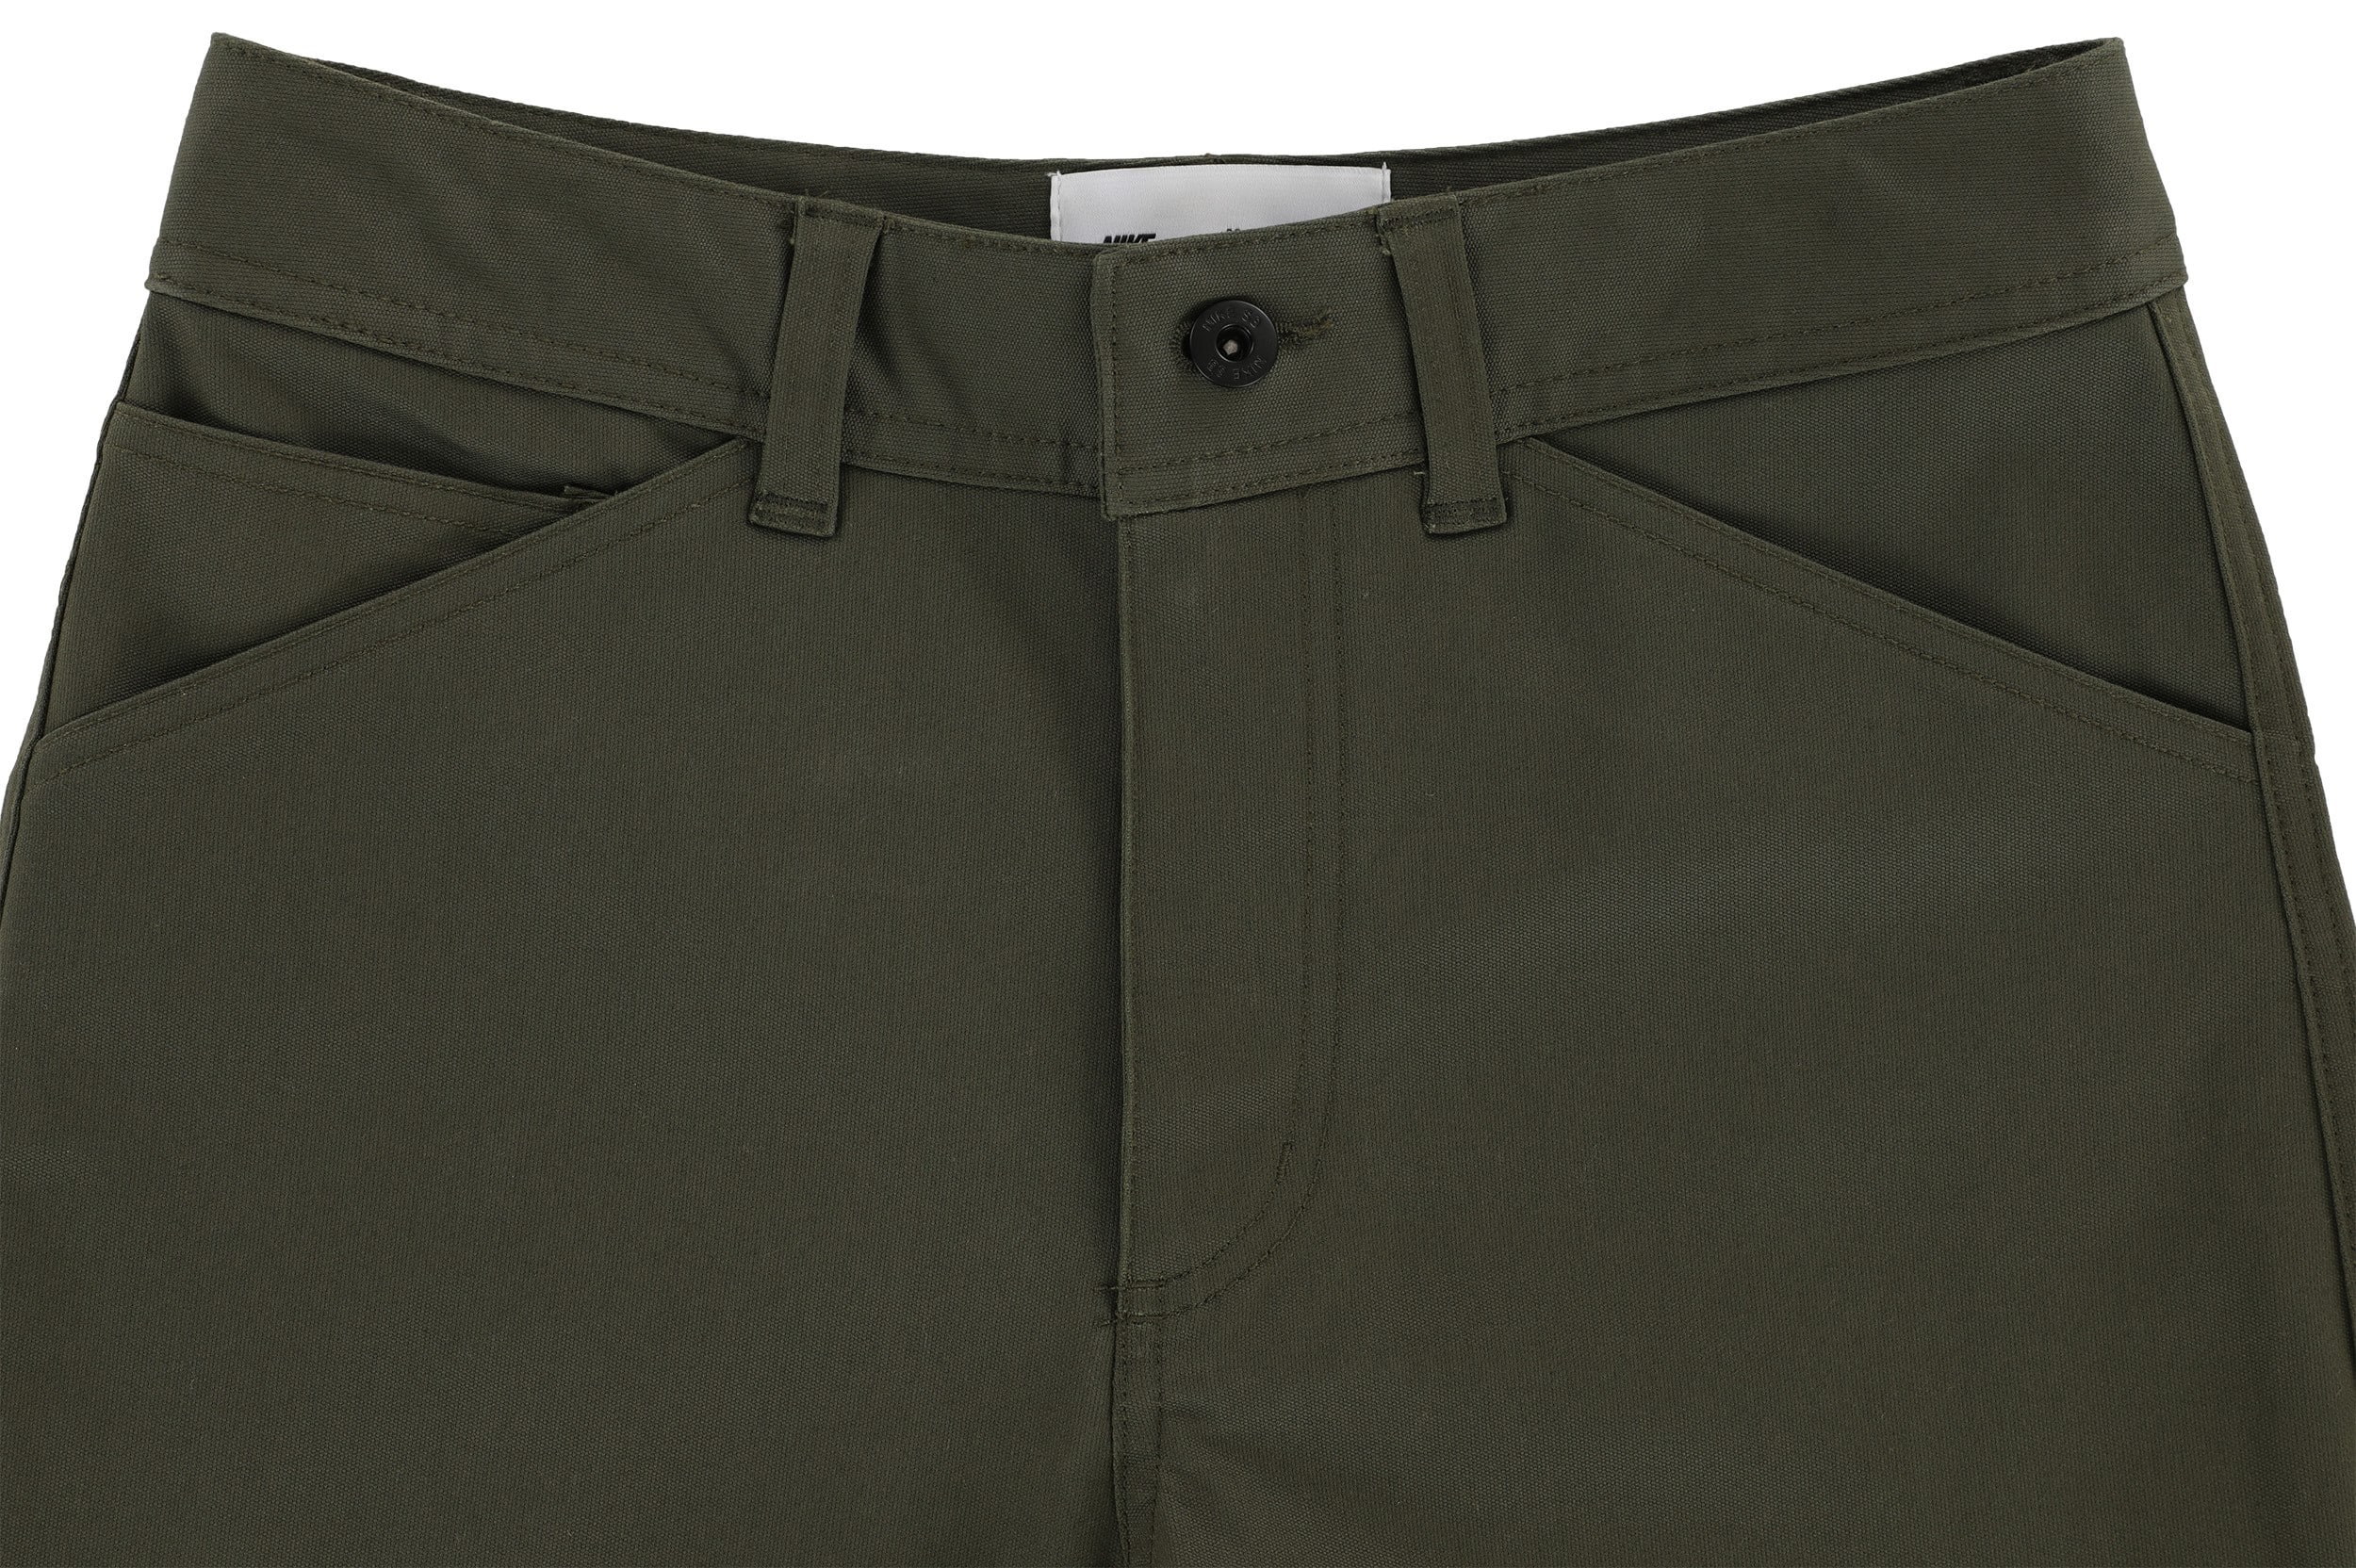 Nike SB SB New Pants - cargo khaki | Tactics